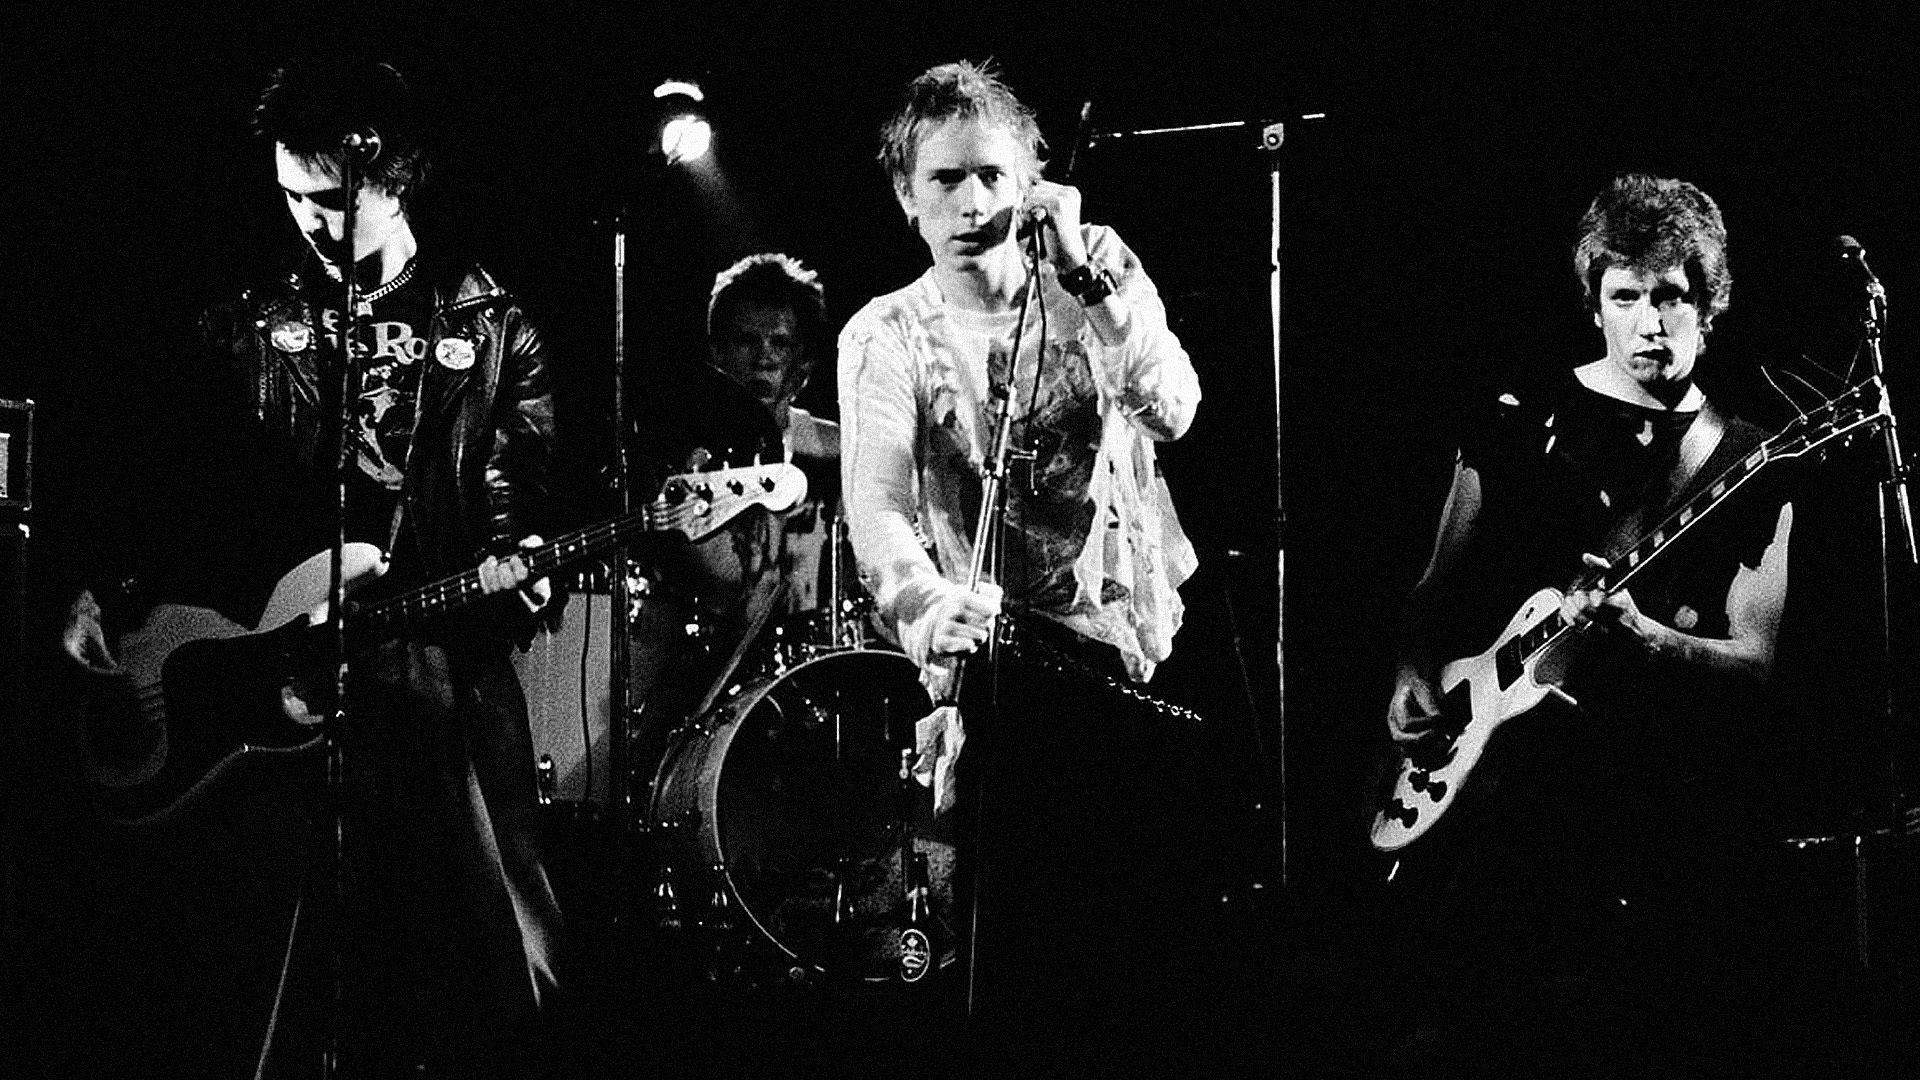 Repro Sex Pistols Concert Poster Photograph By Steve Kearns